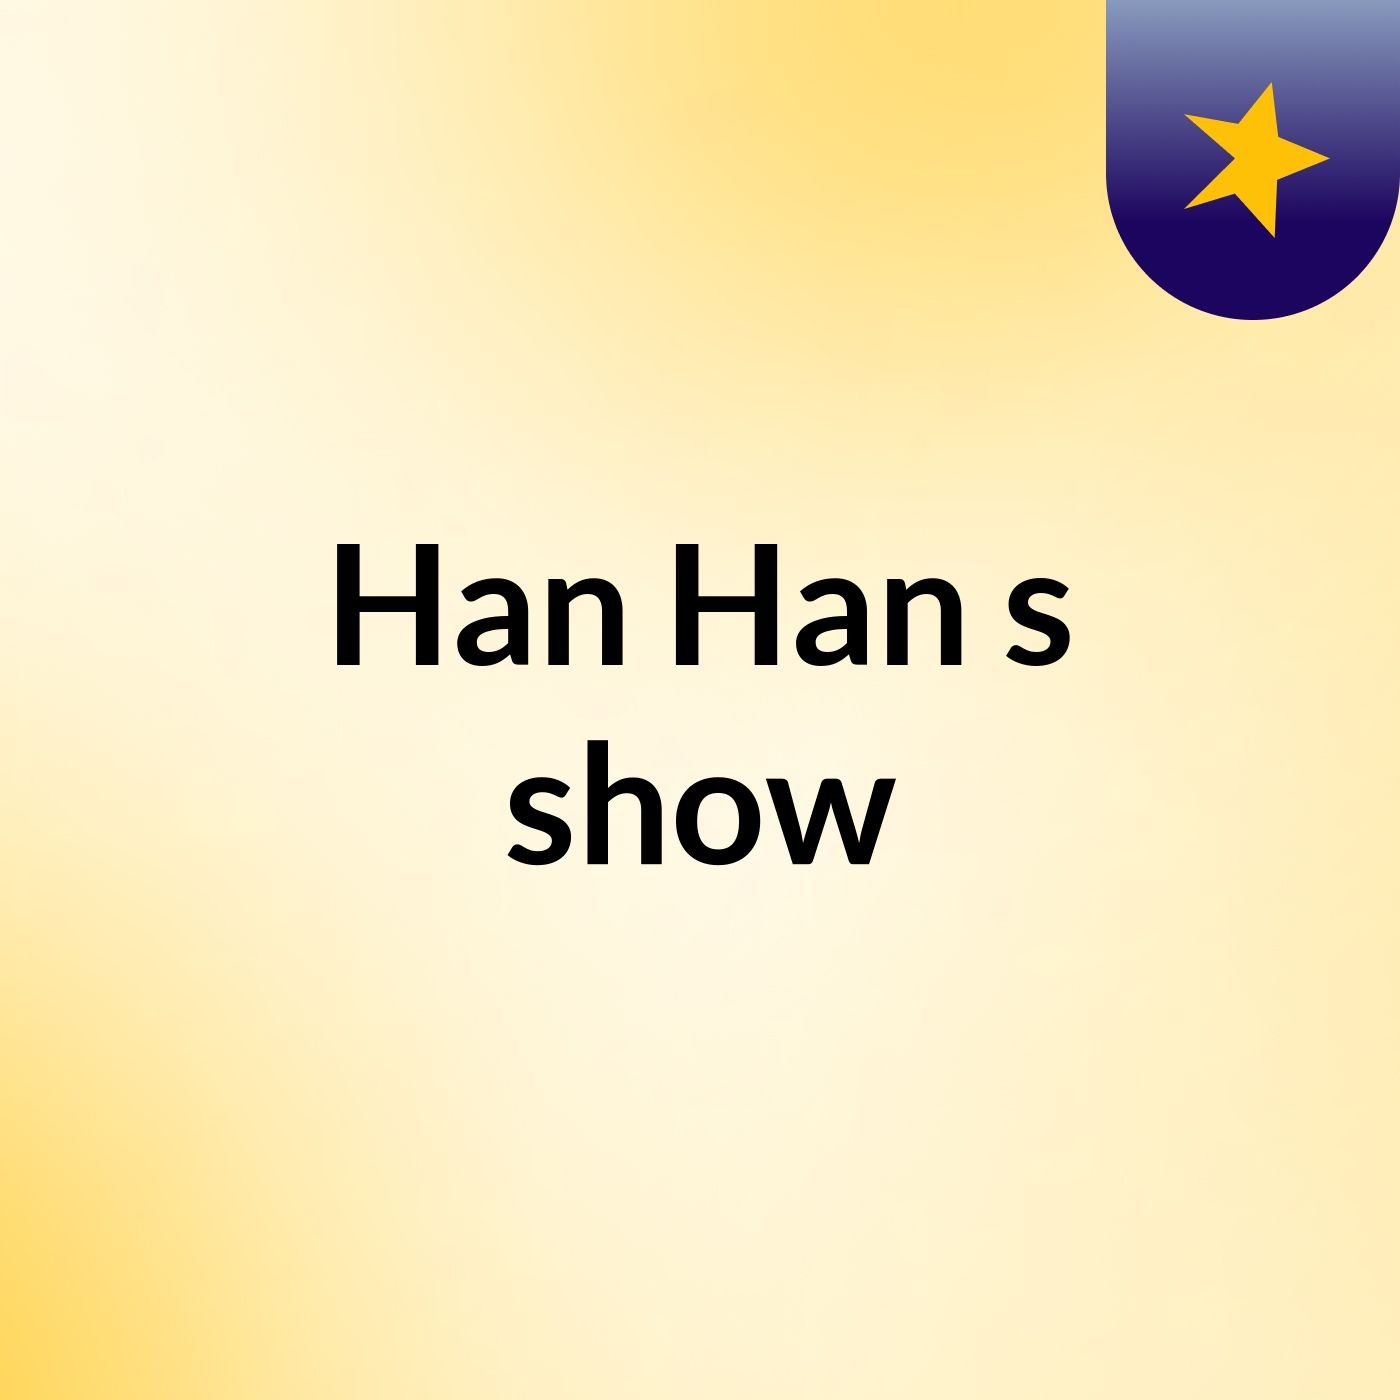 Han Han's show